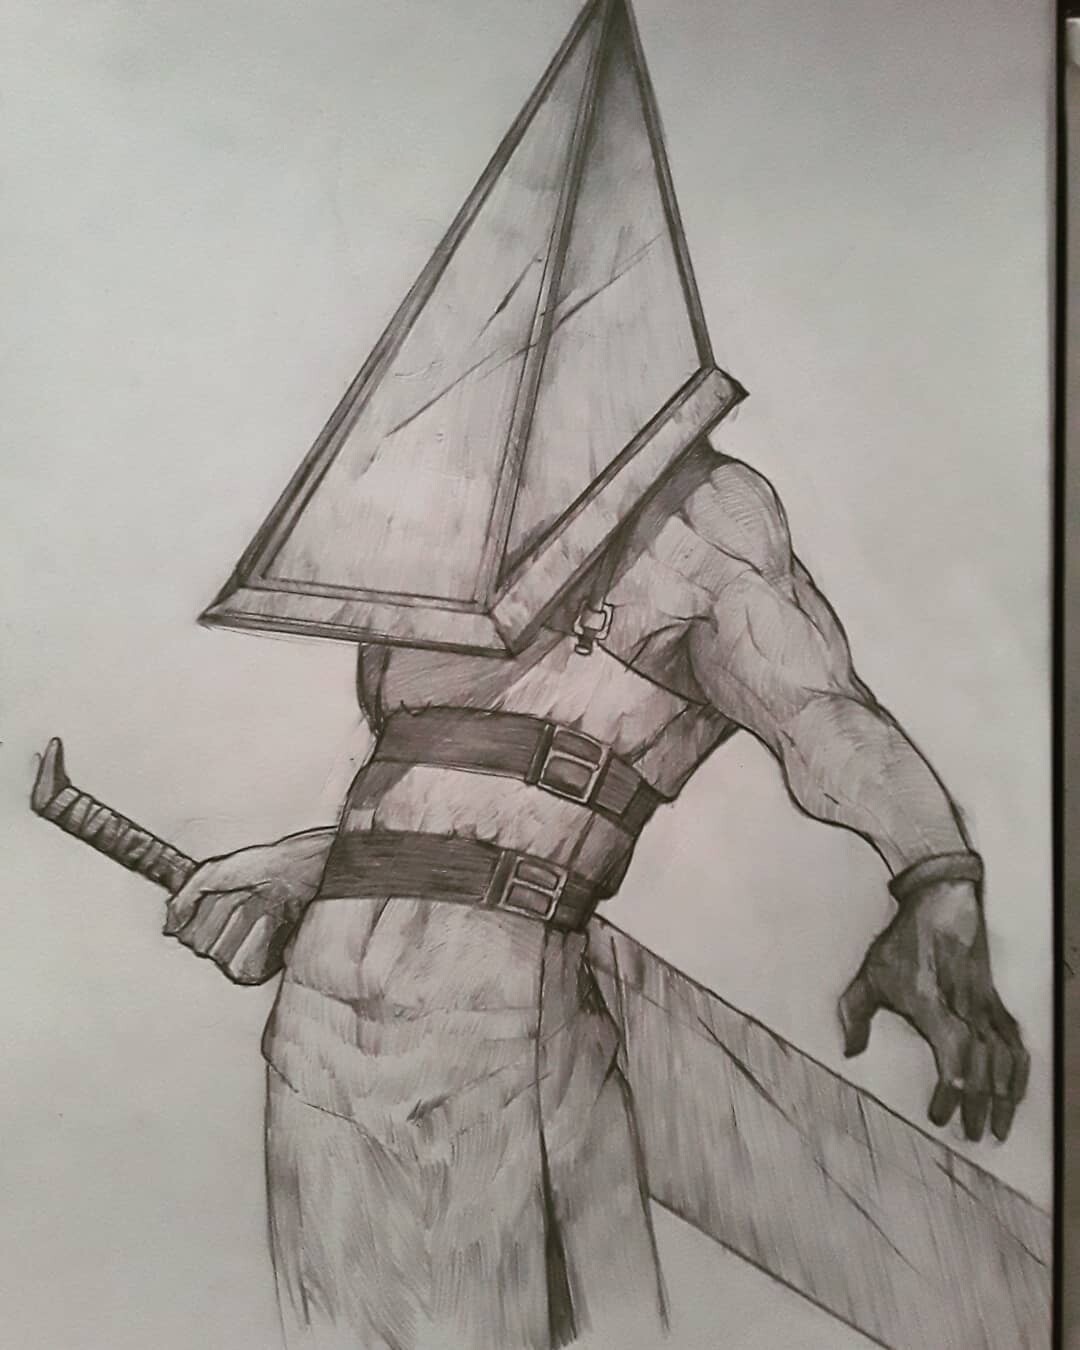 Pyramid Head Silent Hill 2 Personagem de videogame Fan art, disse